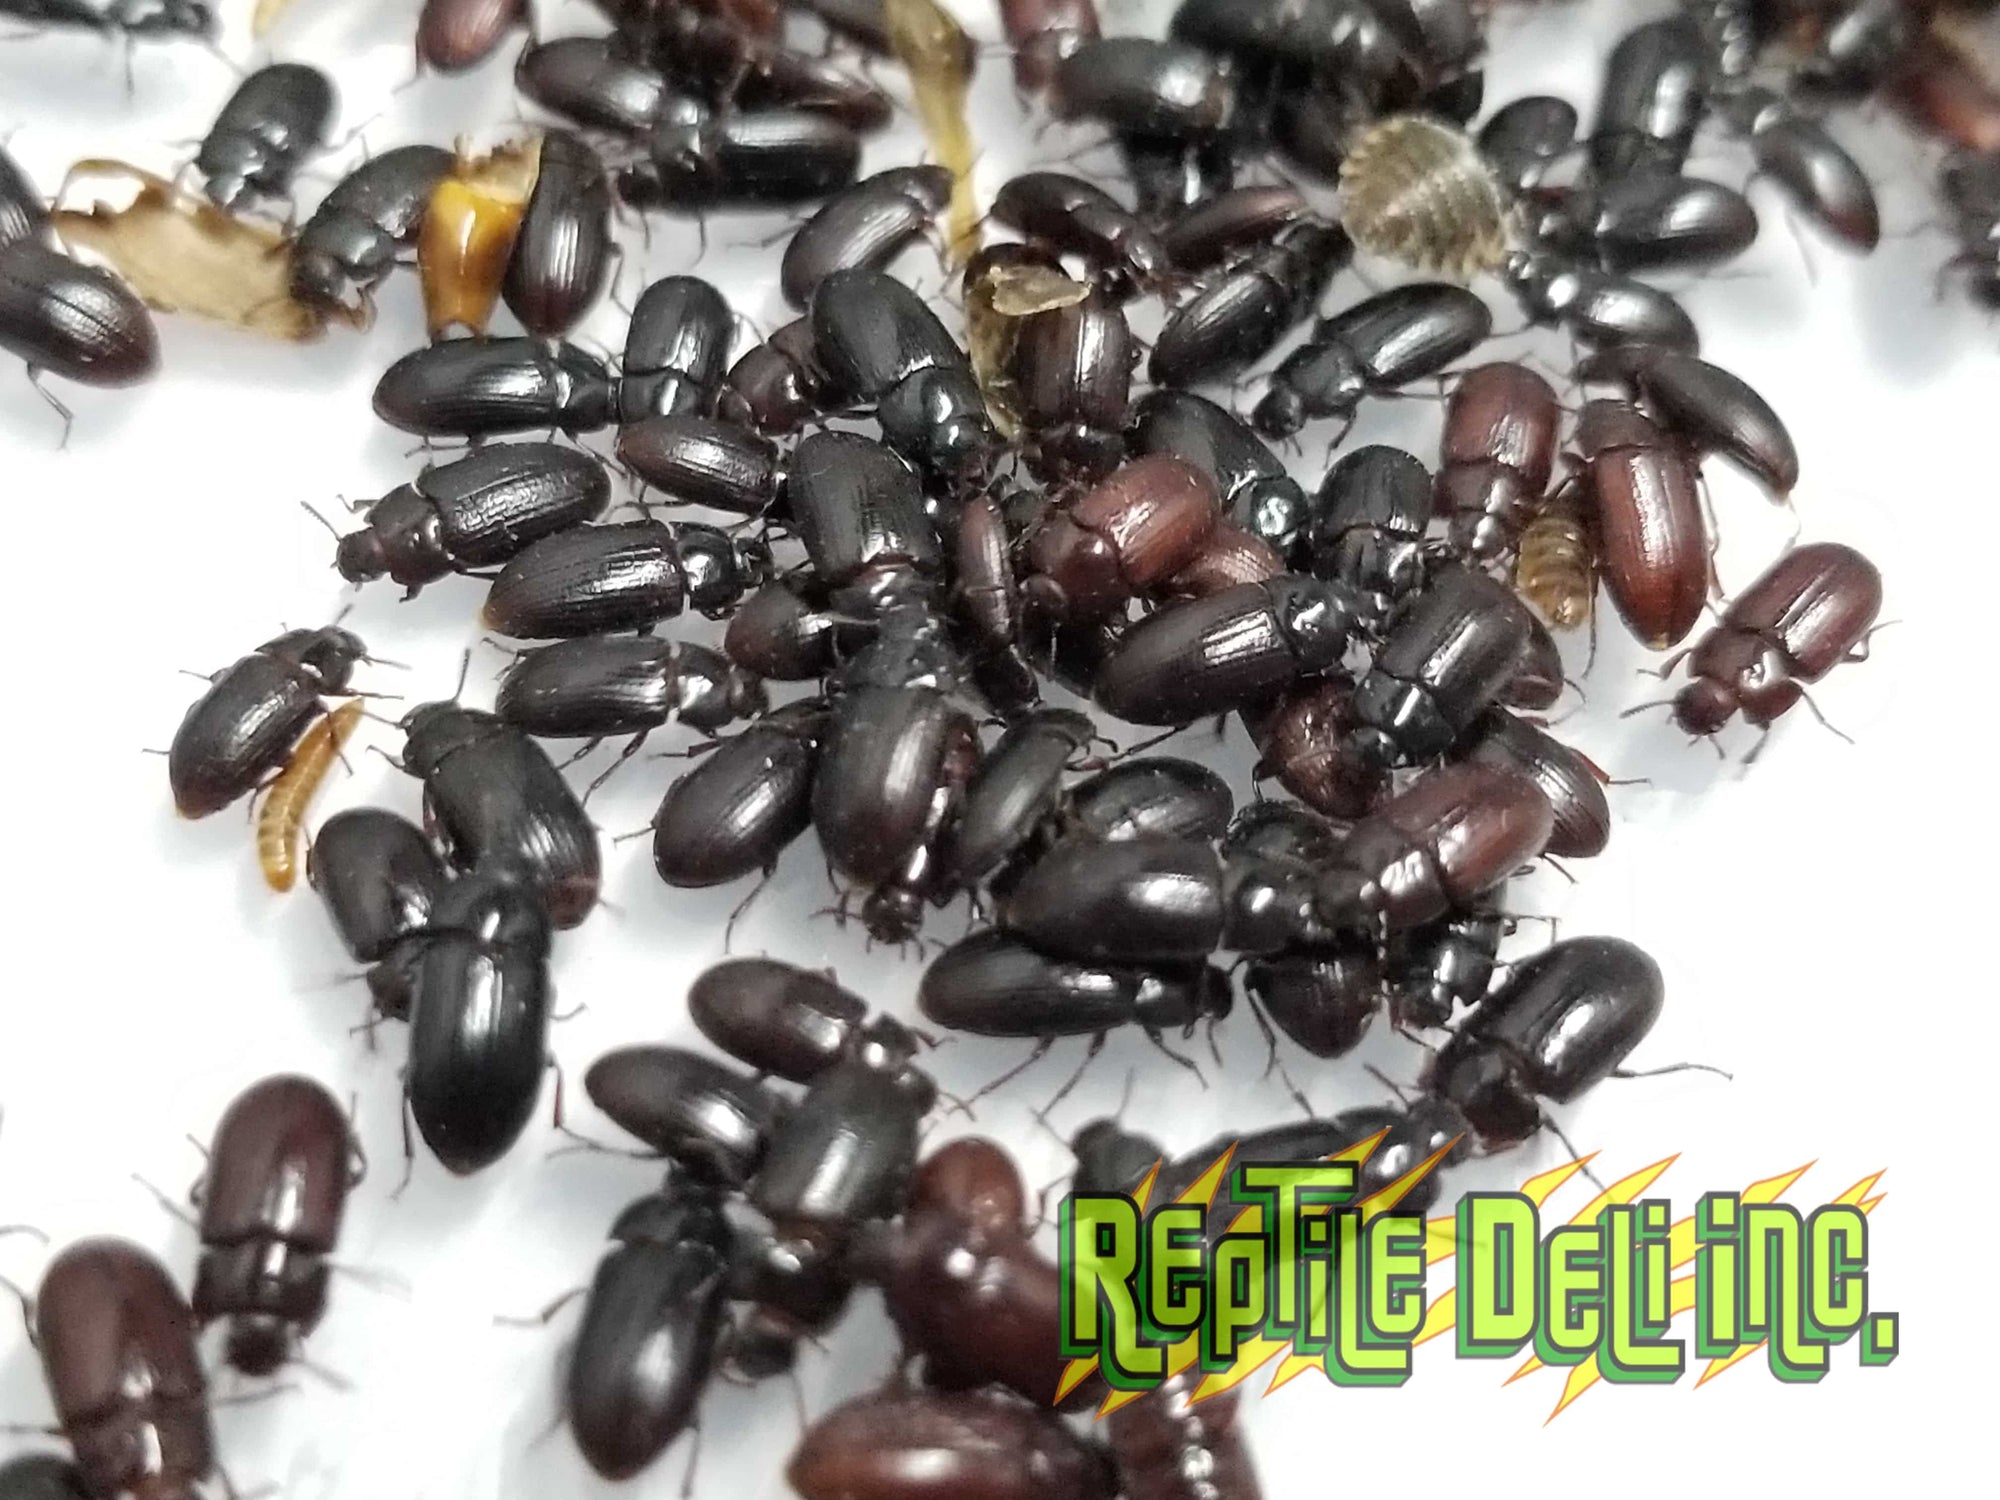 Black Cleaner Beetles - Buffalo Beetles/Dermestid Mix - Reptile Deli Inc.